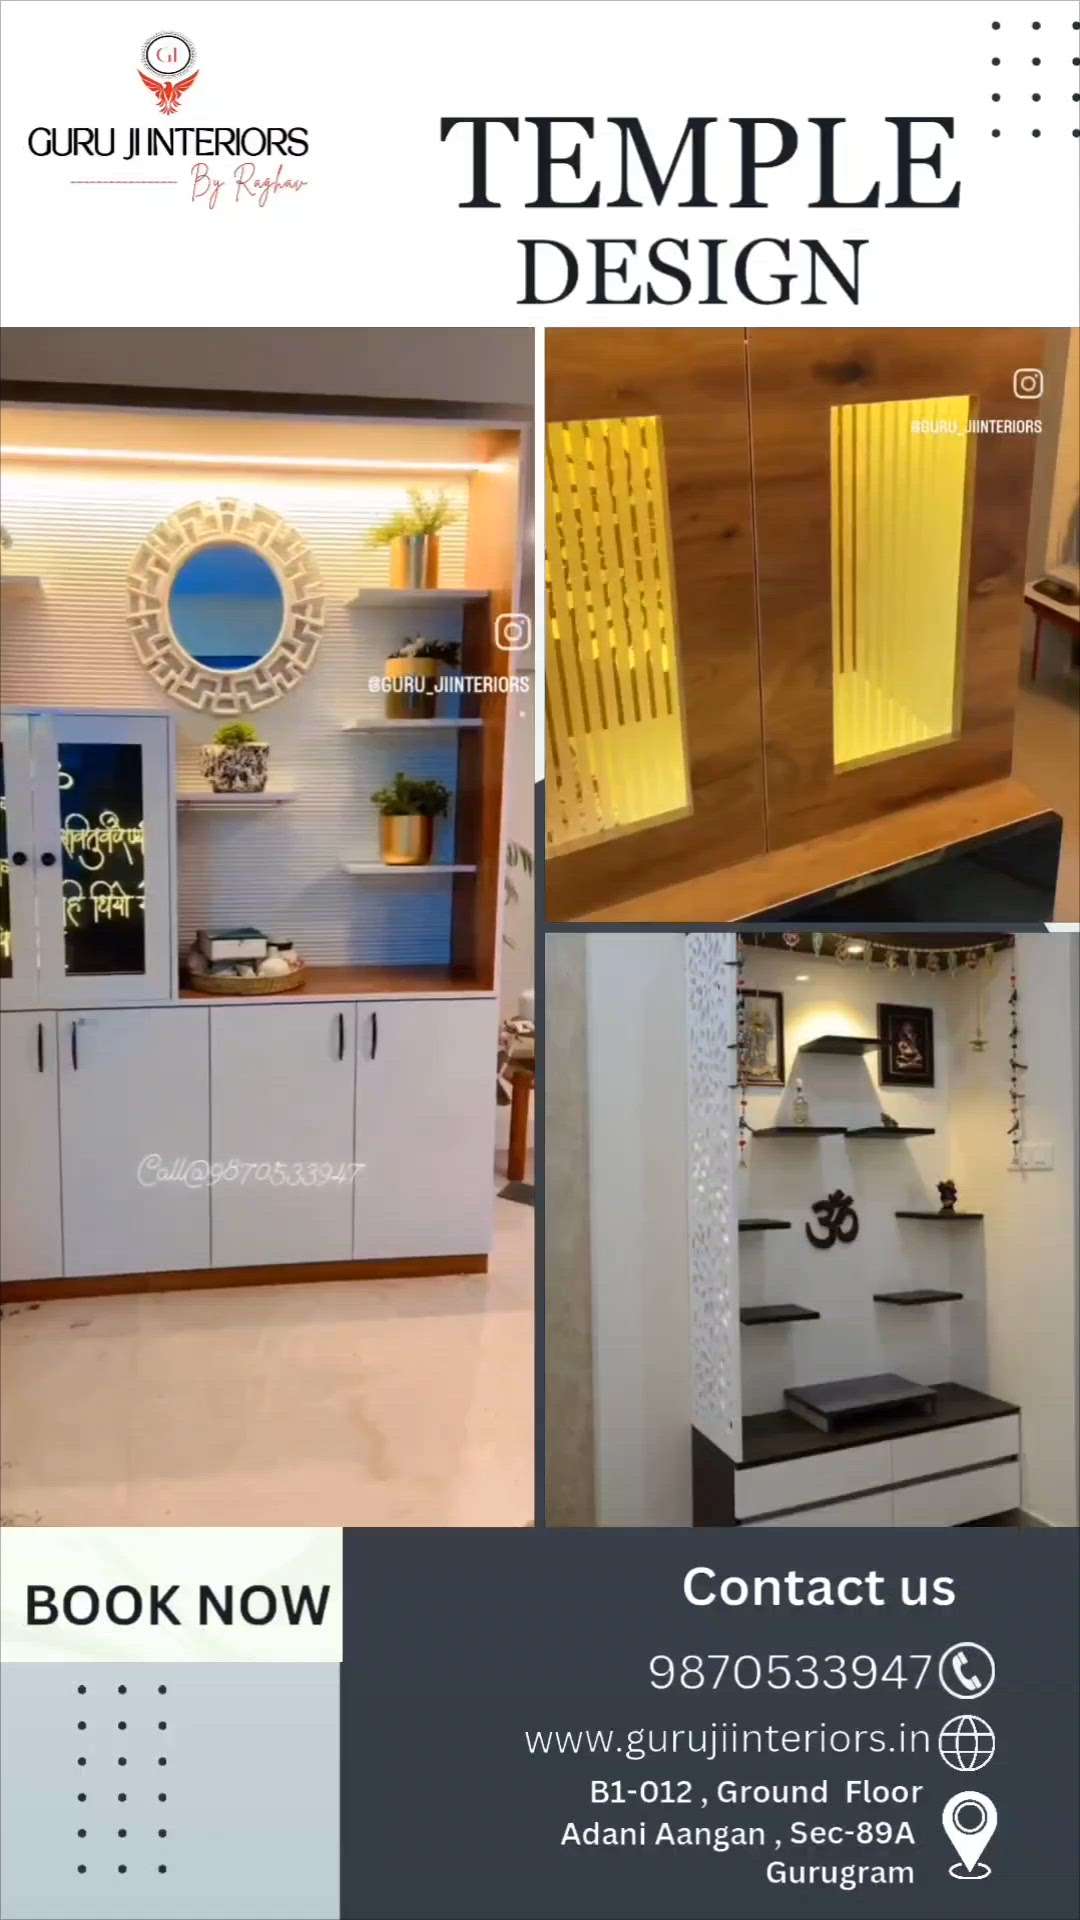 ✨ Beautiful Pooja unit Design
Design by - Raghav 
Guru ji interiors 
Call - 9870533947
.
Best interior designer in all over Gurugram #gurujiinteriors
.
#blessings#interior#
#interiorstyling#
#new_mandir_design#
#wooden_pooja_mandir